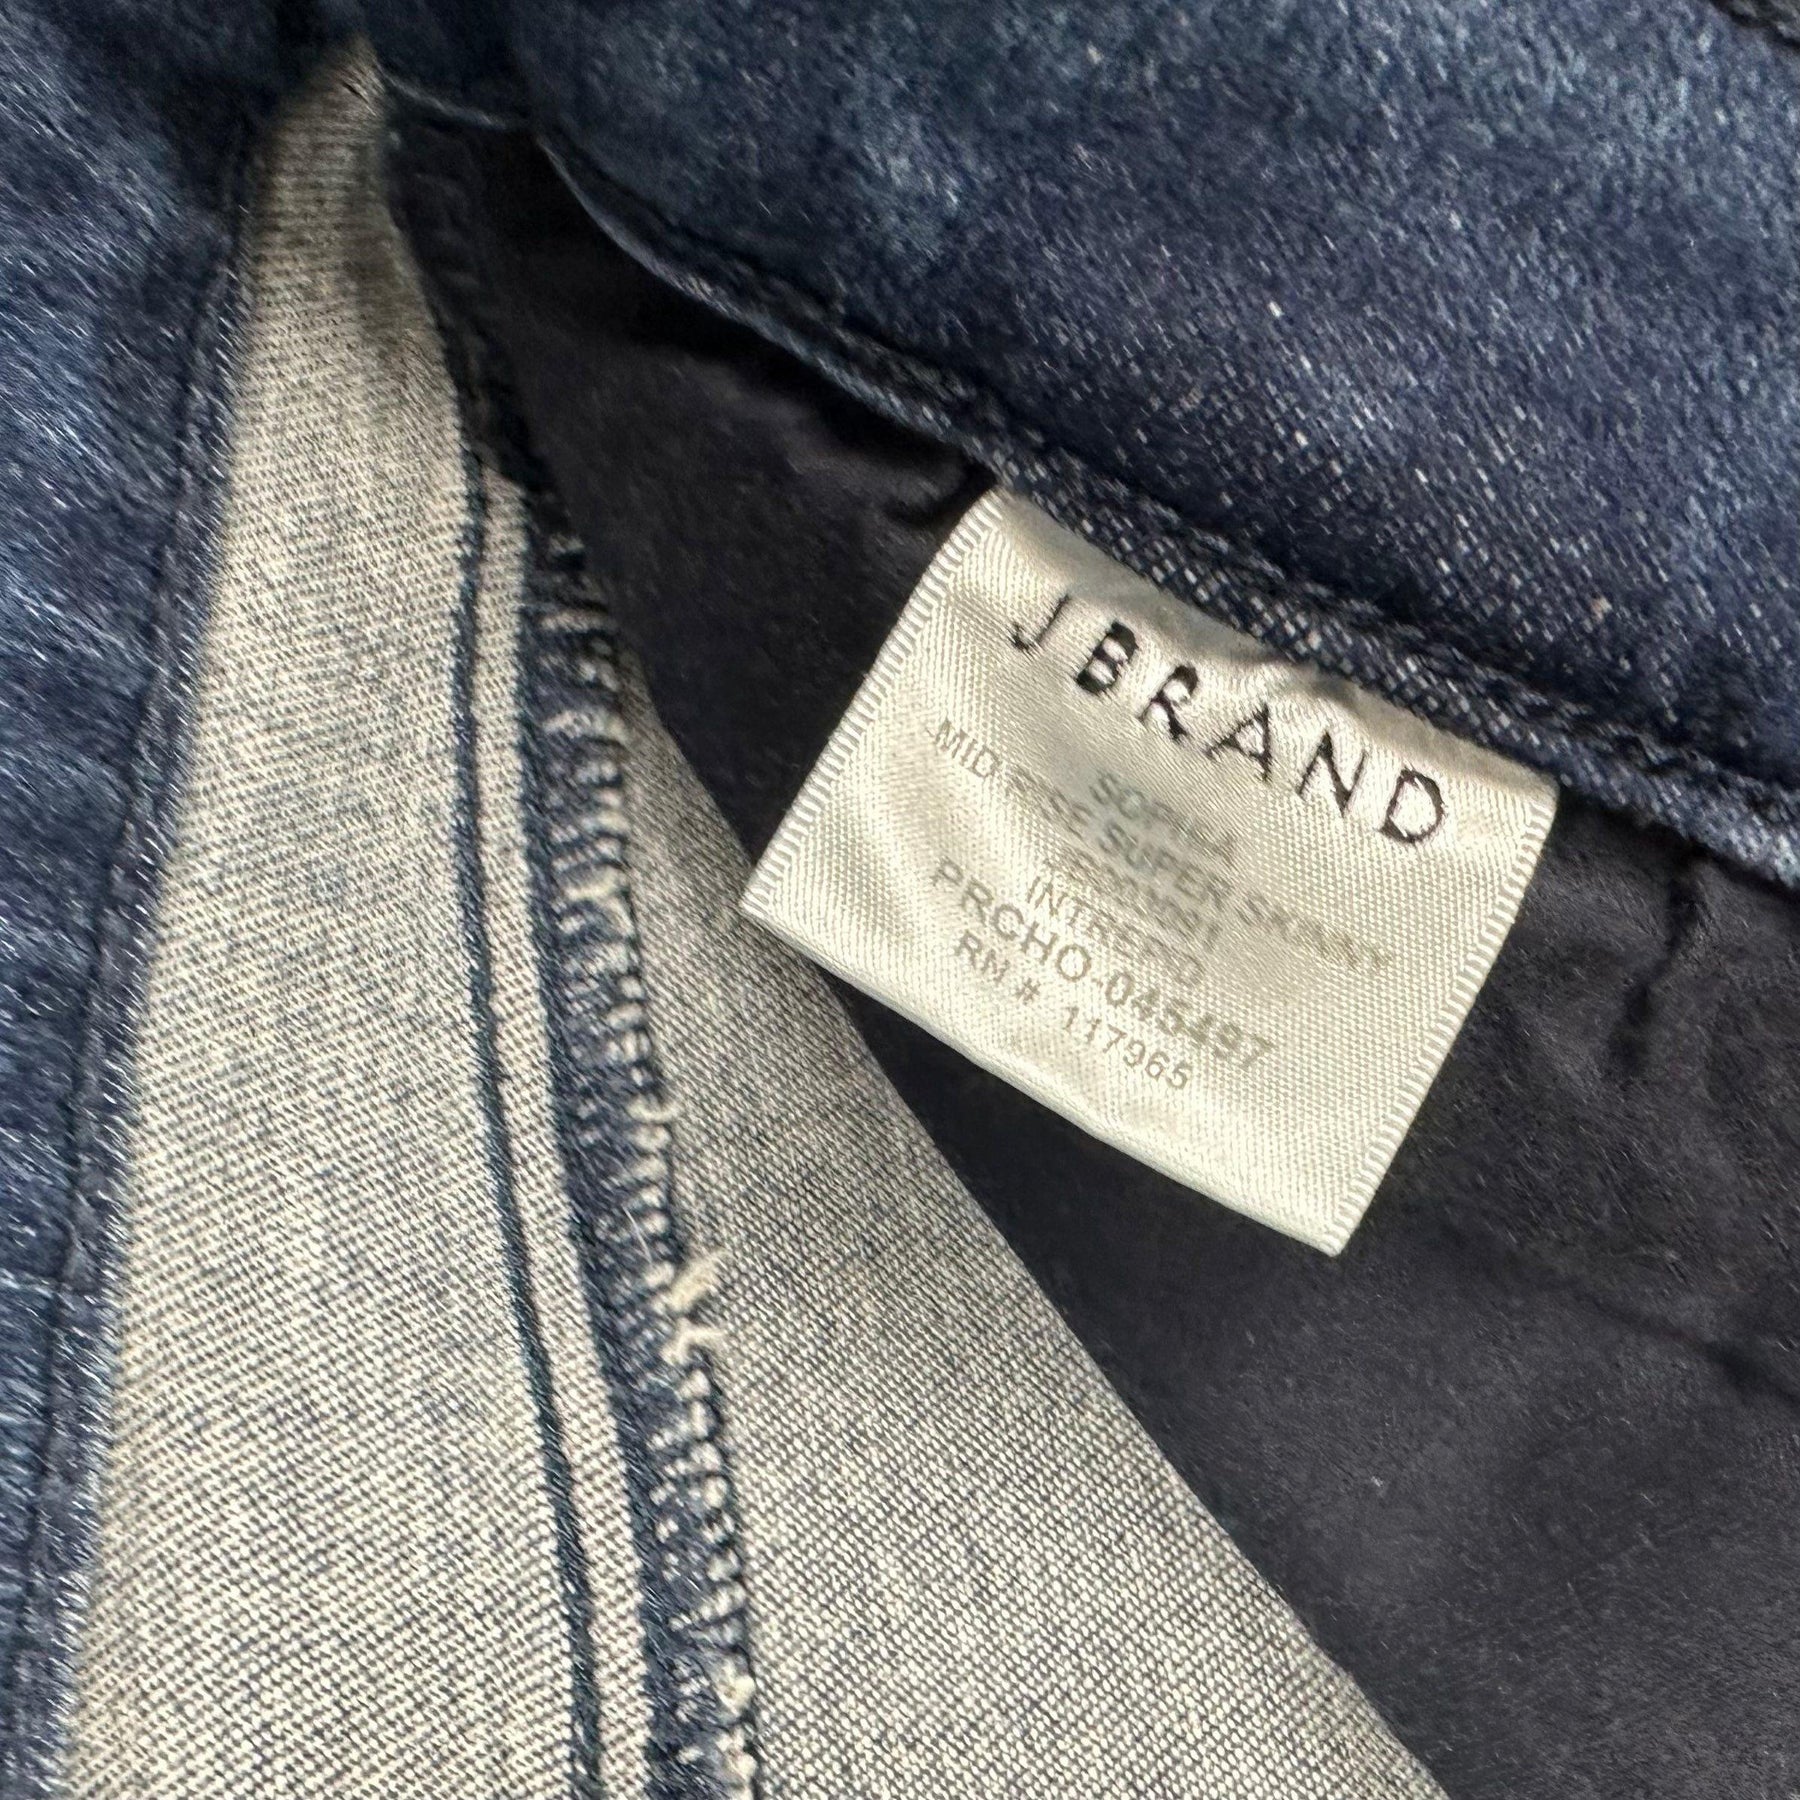 J Brand Blue Jeans Size 28 RN# 117965